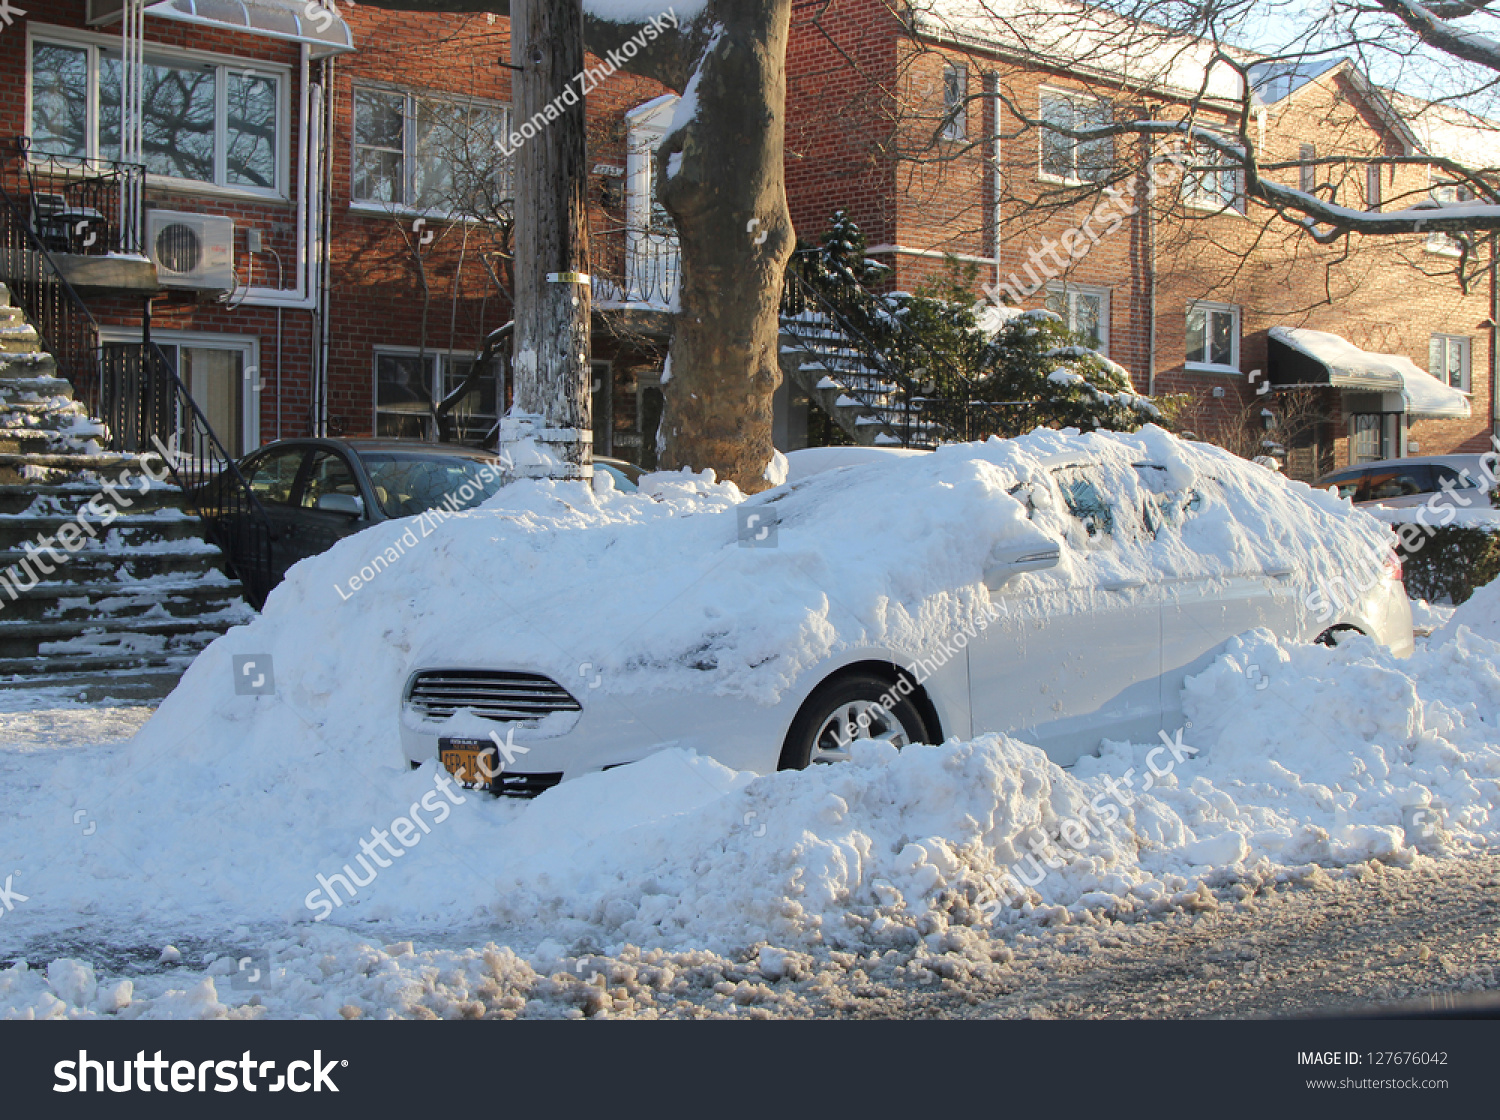 Brooklyn, New York - February 9: Car Under Snow On February 9, 2013 In ...